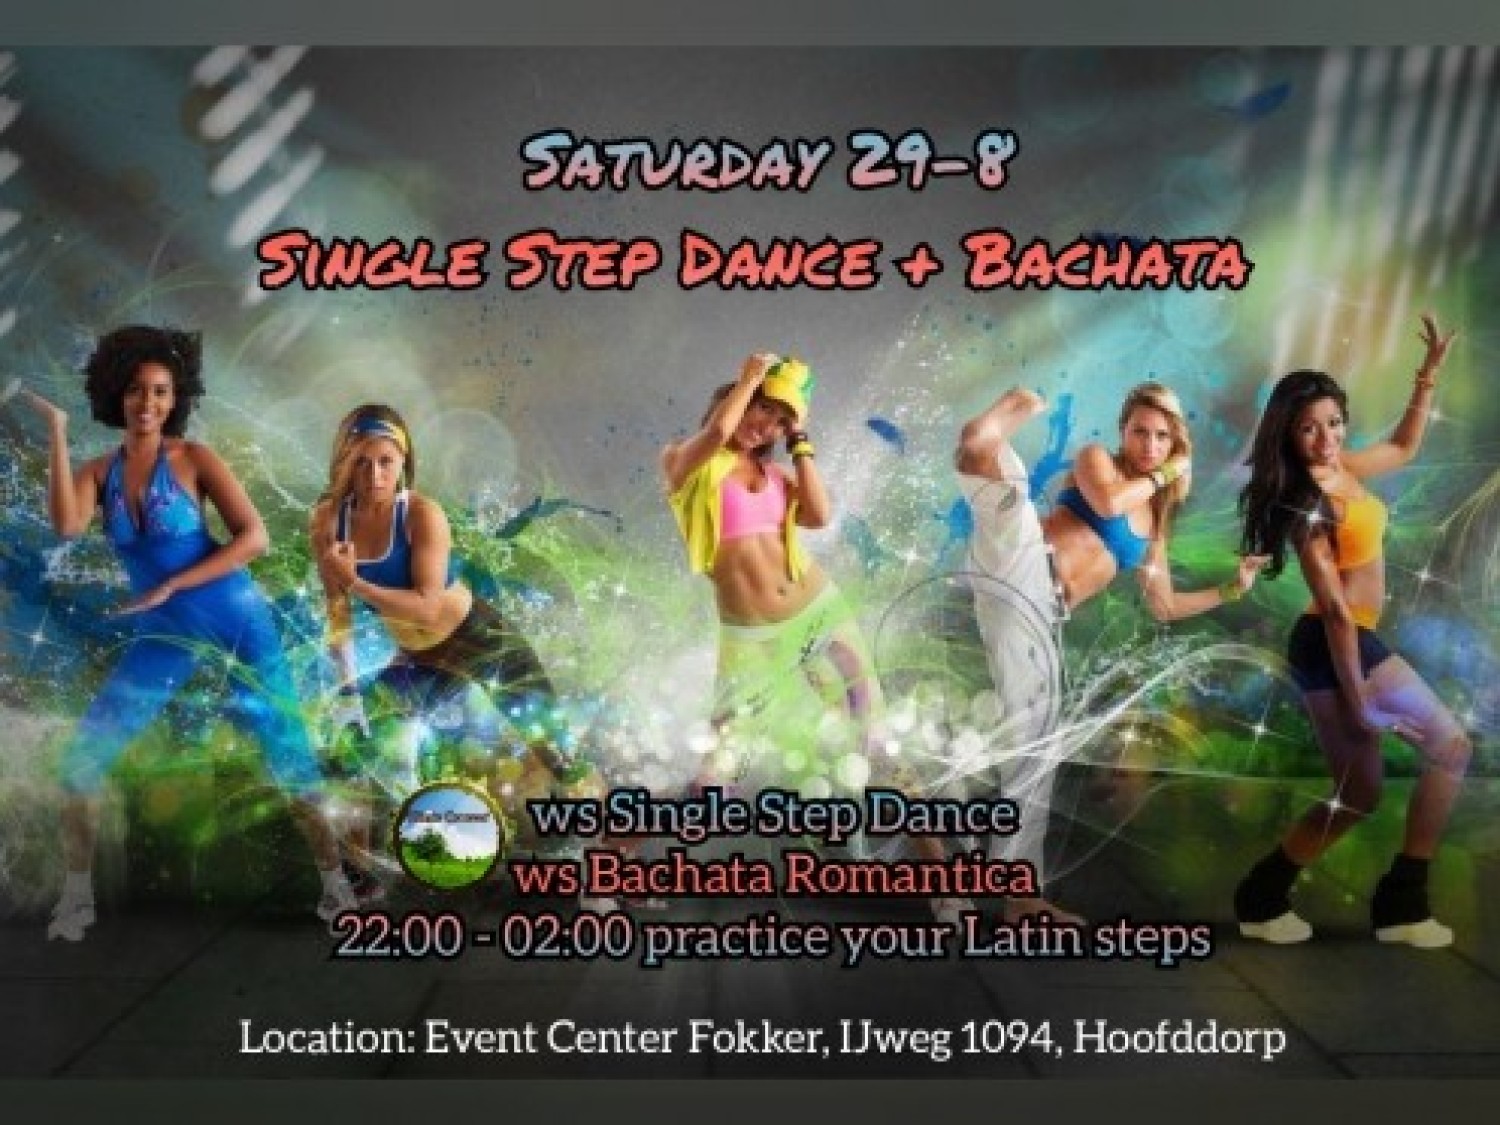 Single Step Dance + Bachata